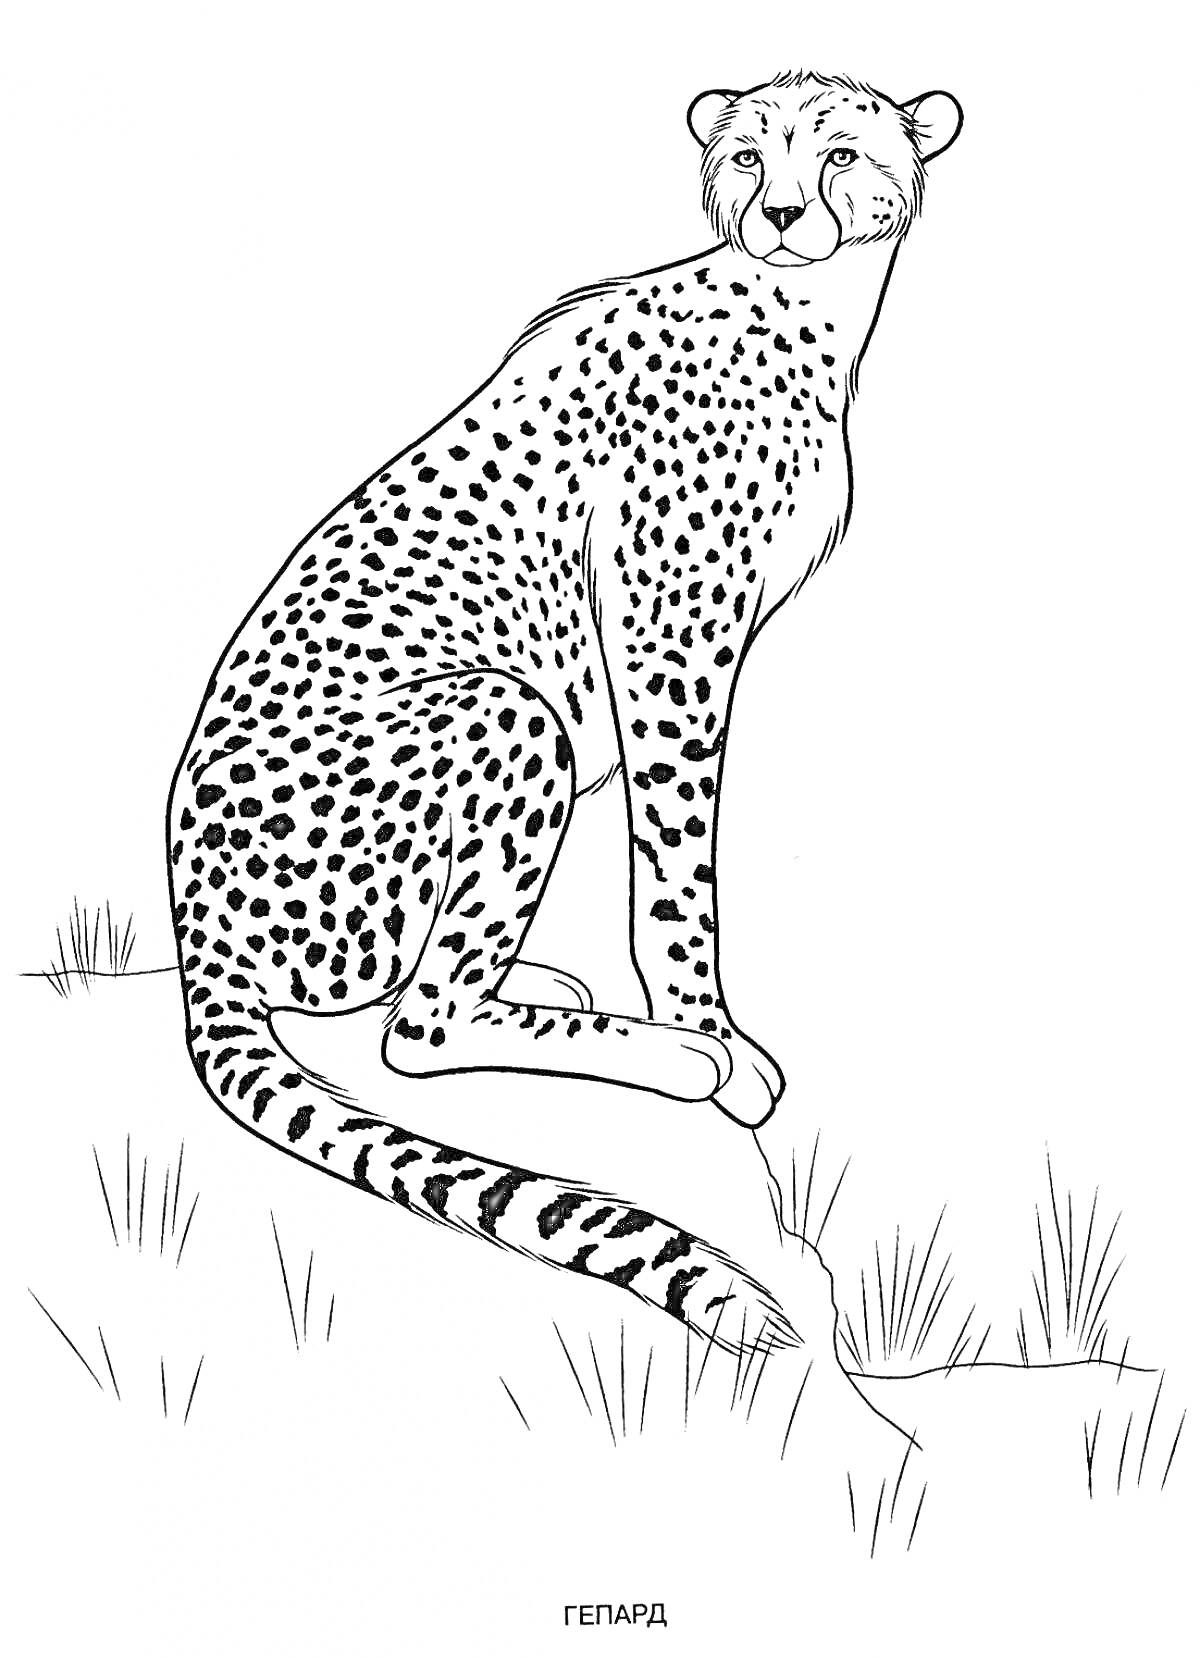 Раскраска Гепард на камне с травой